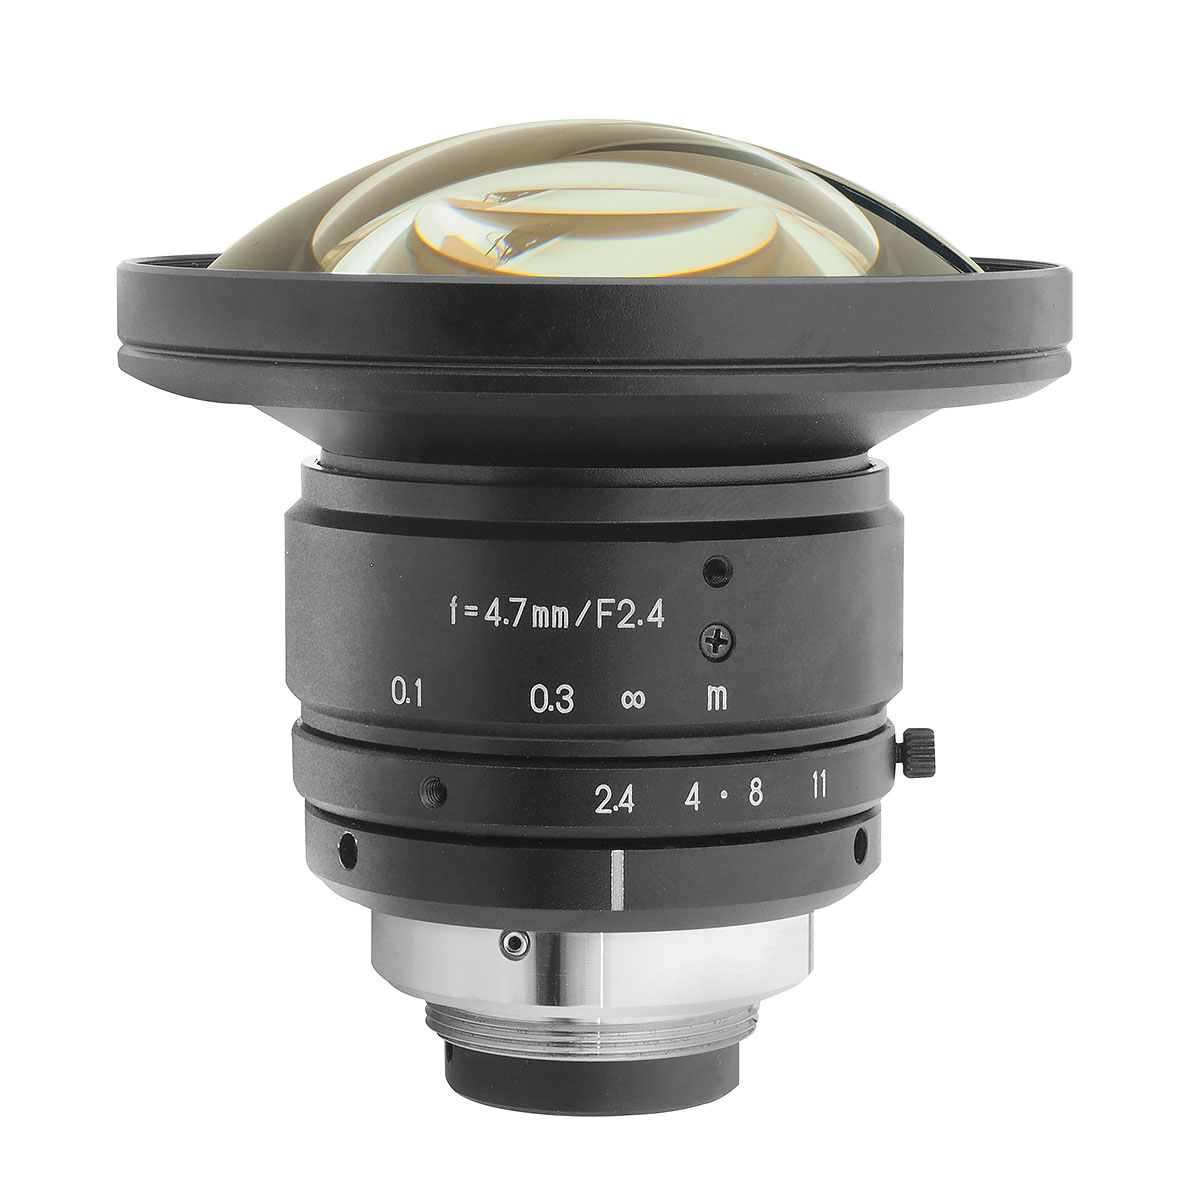 verbinding verbroken Anoi keuken 4,7mm, 1", Kowa C-Mount Lens for Machine Vision Industrial Cameras